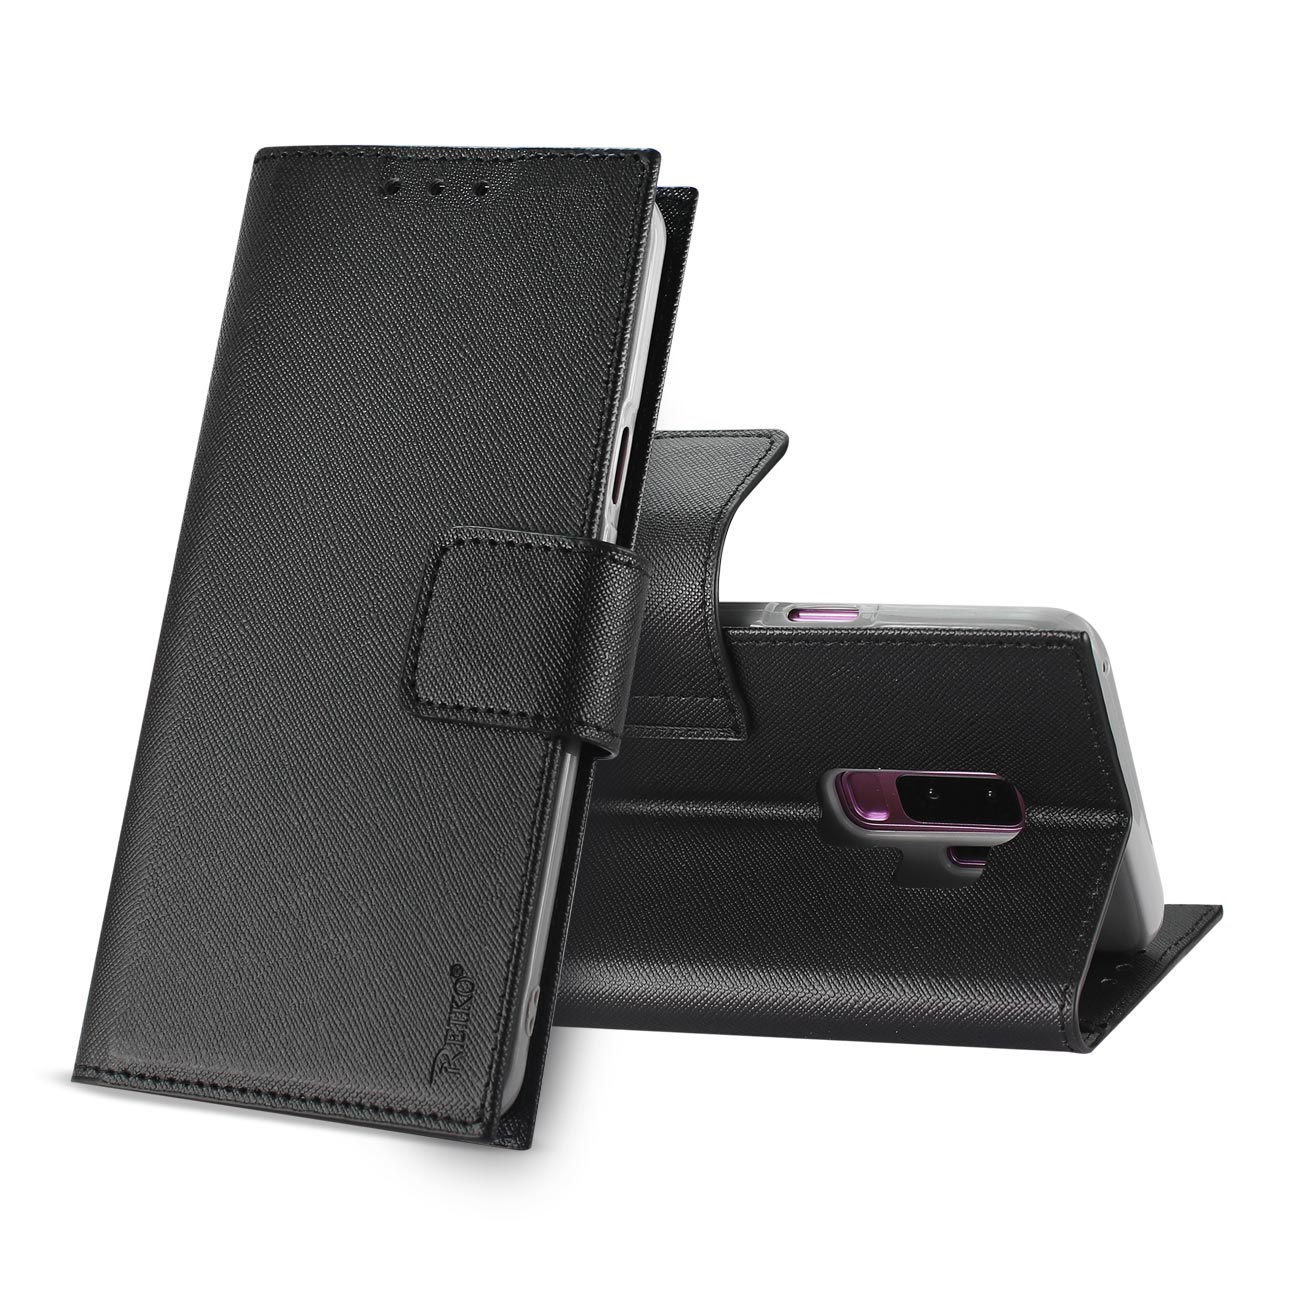 Samsung Galaxy S9 Plus 3-In-1 Wallet Case In Black